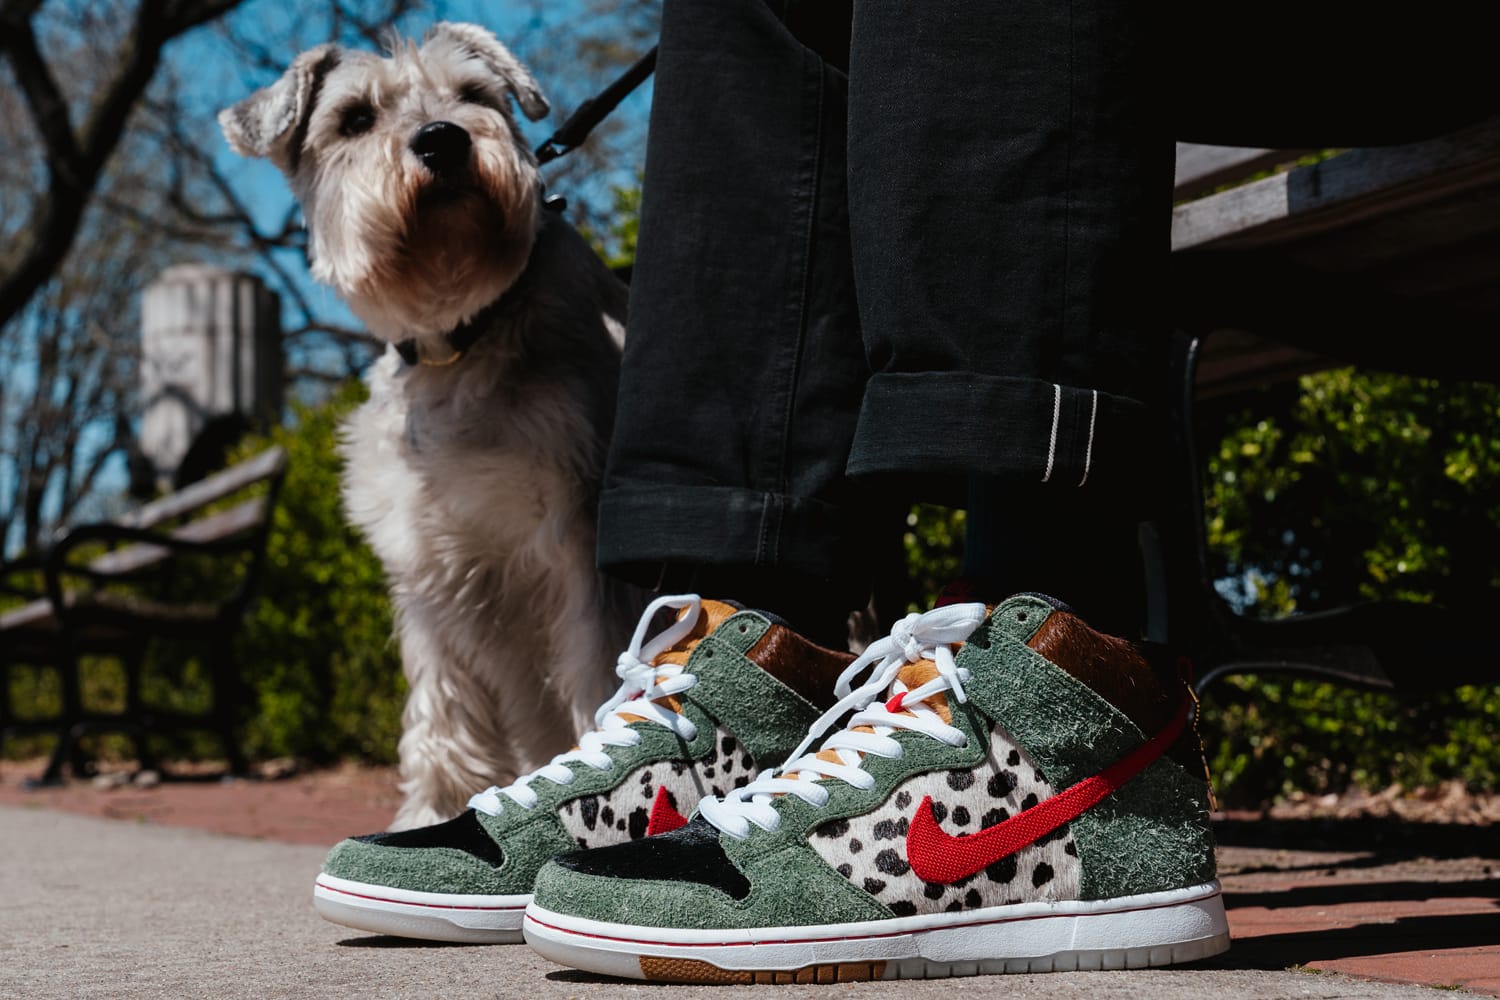 Nike SB Dunk High "Walk the Dog" Closer Look | HYPEBEAST